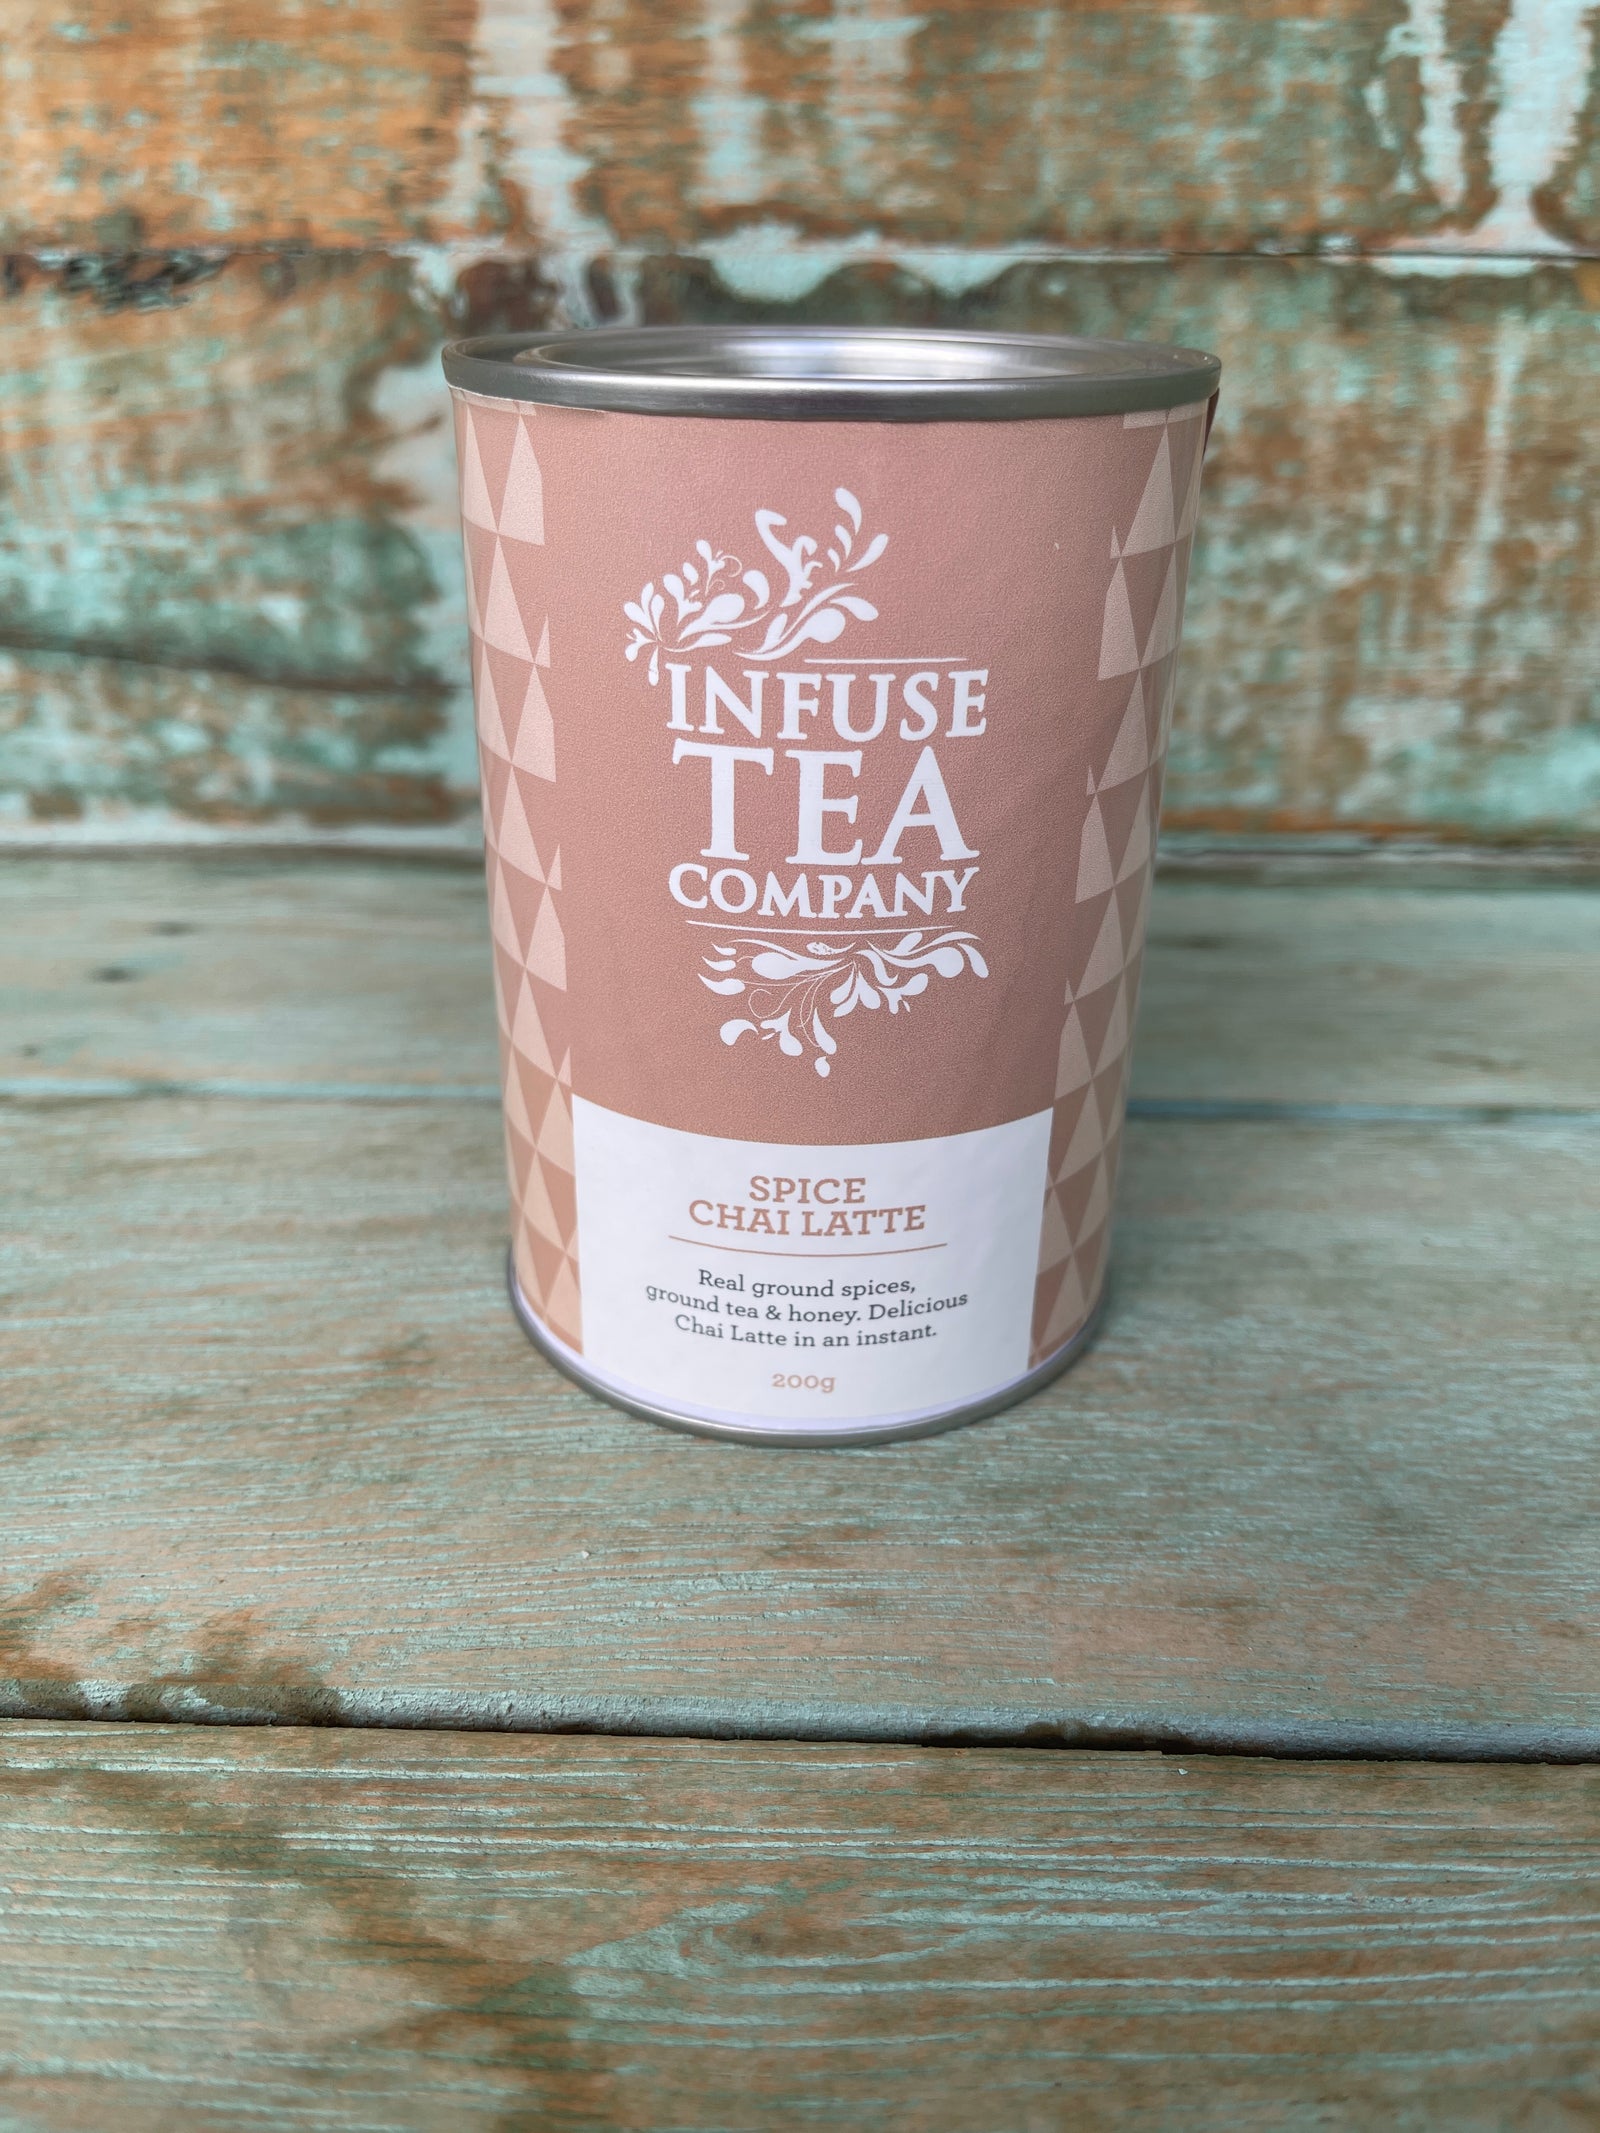 Infuse tea company - Spice chai latte